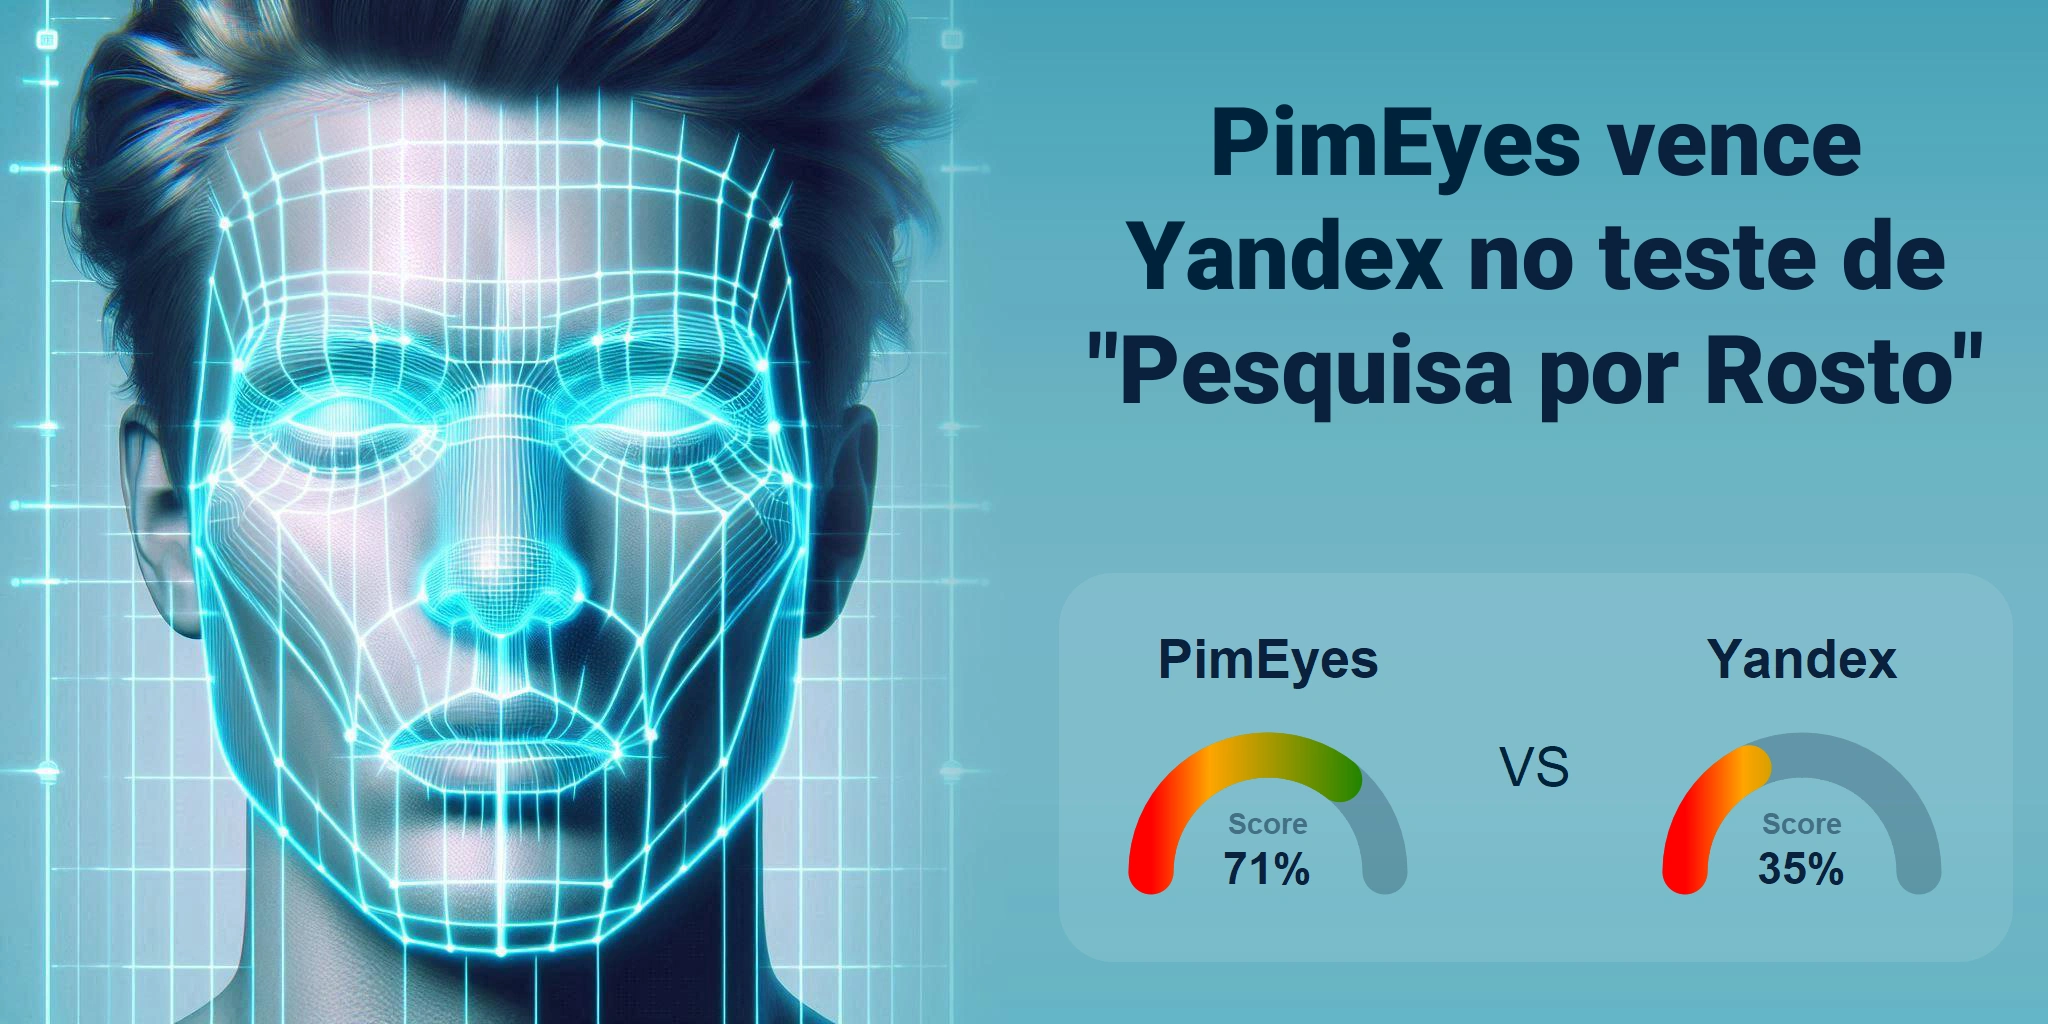 PimEyes.com vs Yandex.com